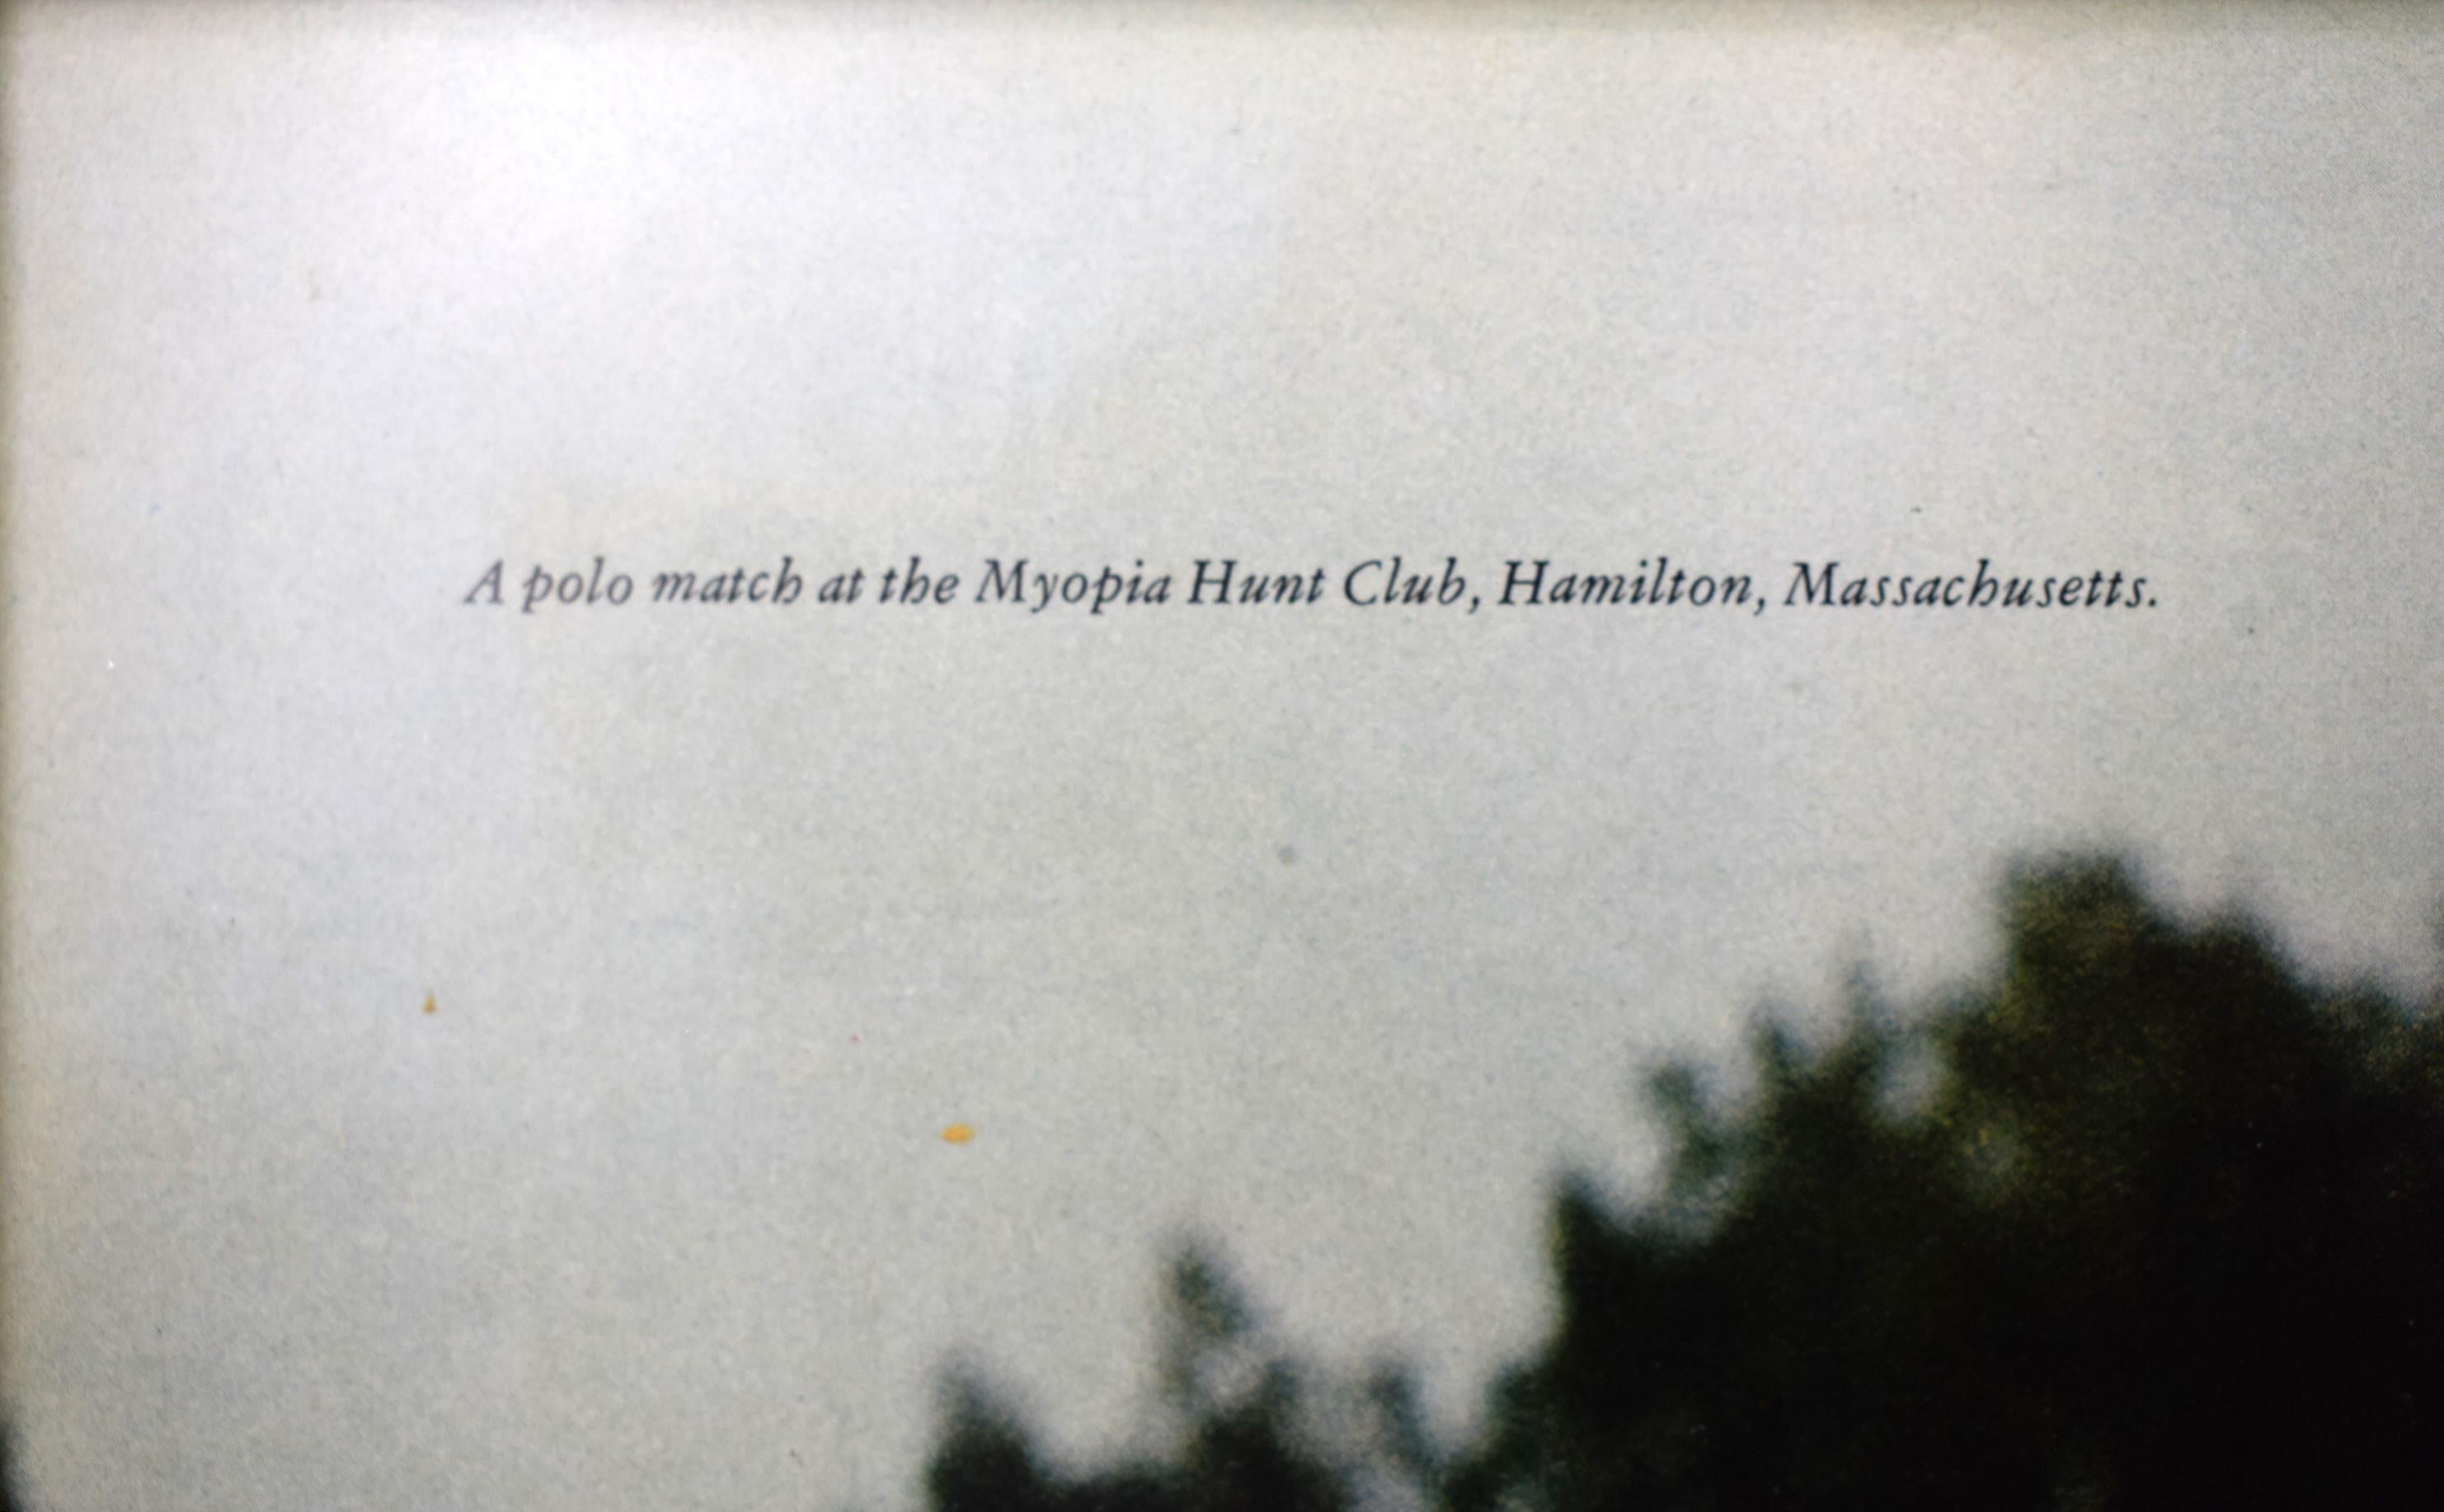 myopia hunt club polo